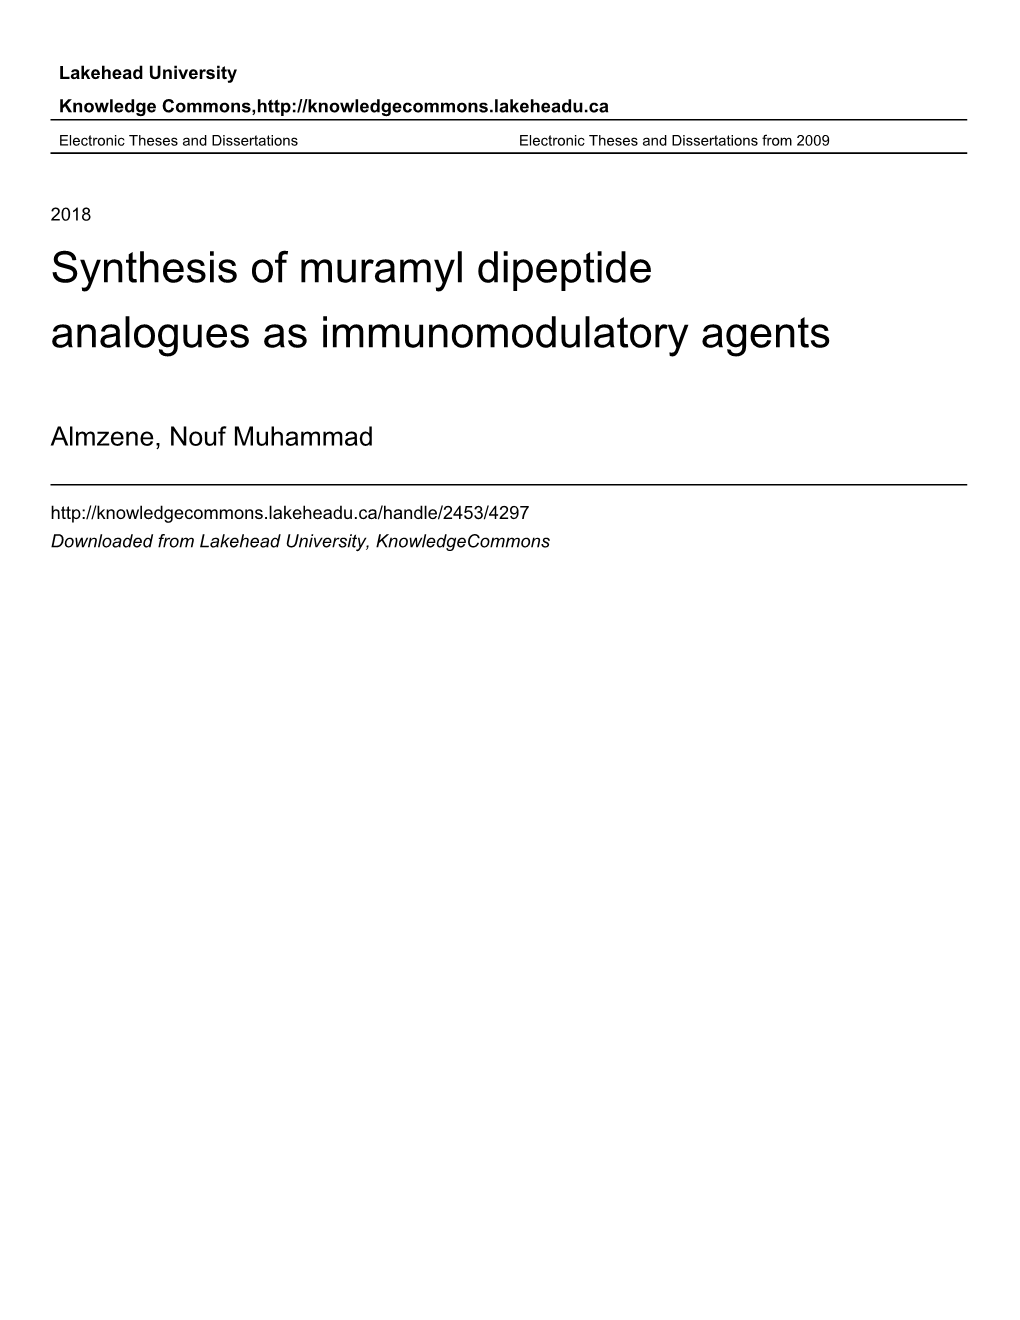 Synthesis of Muramyl Dipeptide Analogues As Immunomodulatory Agents